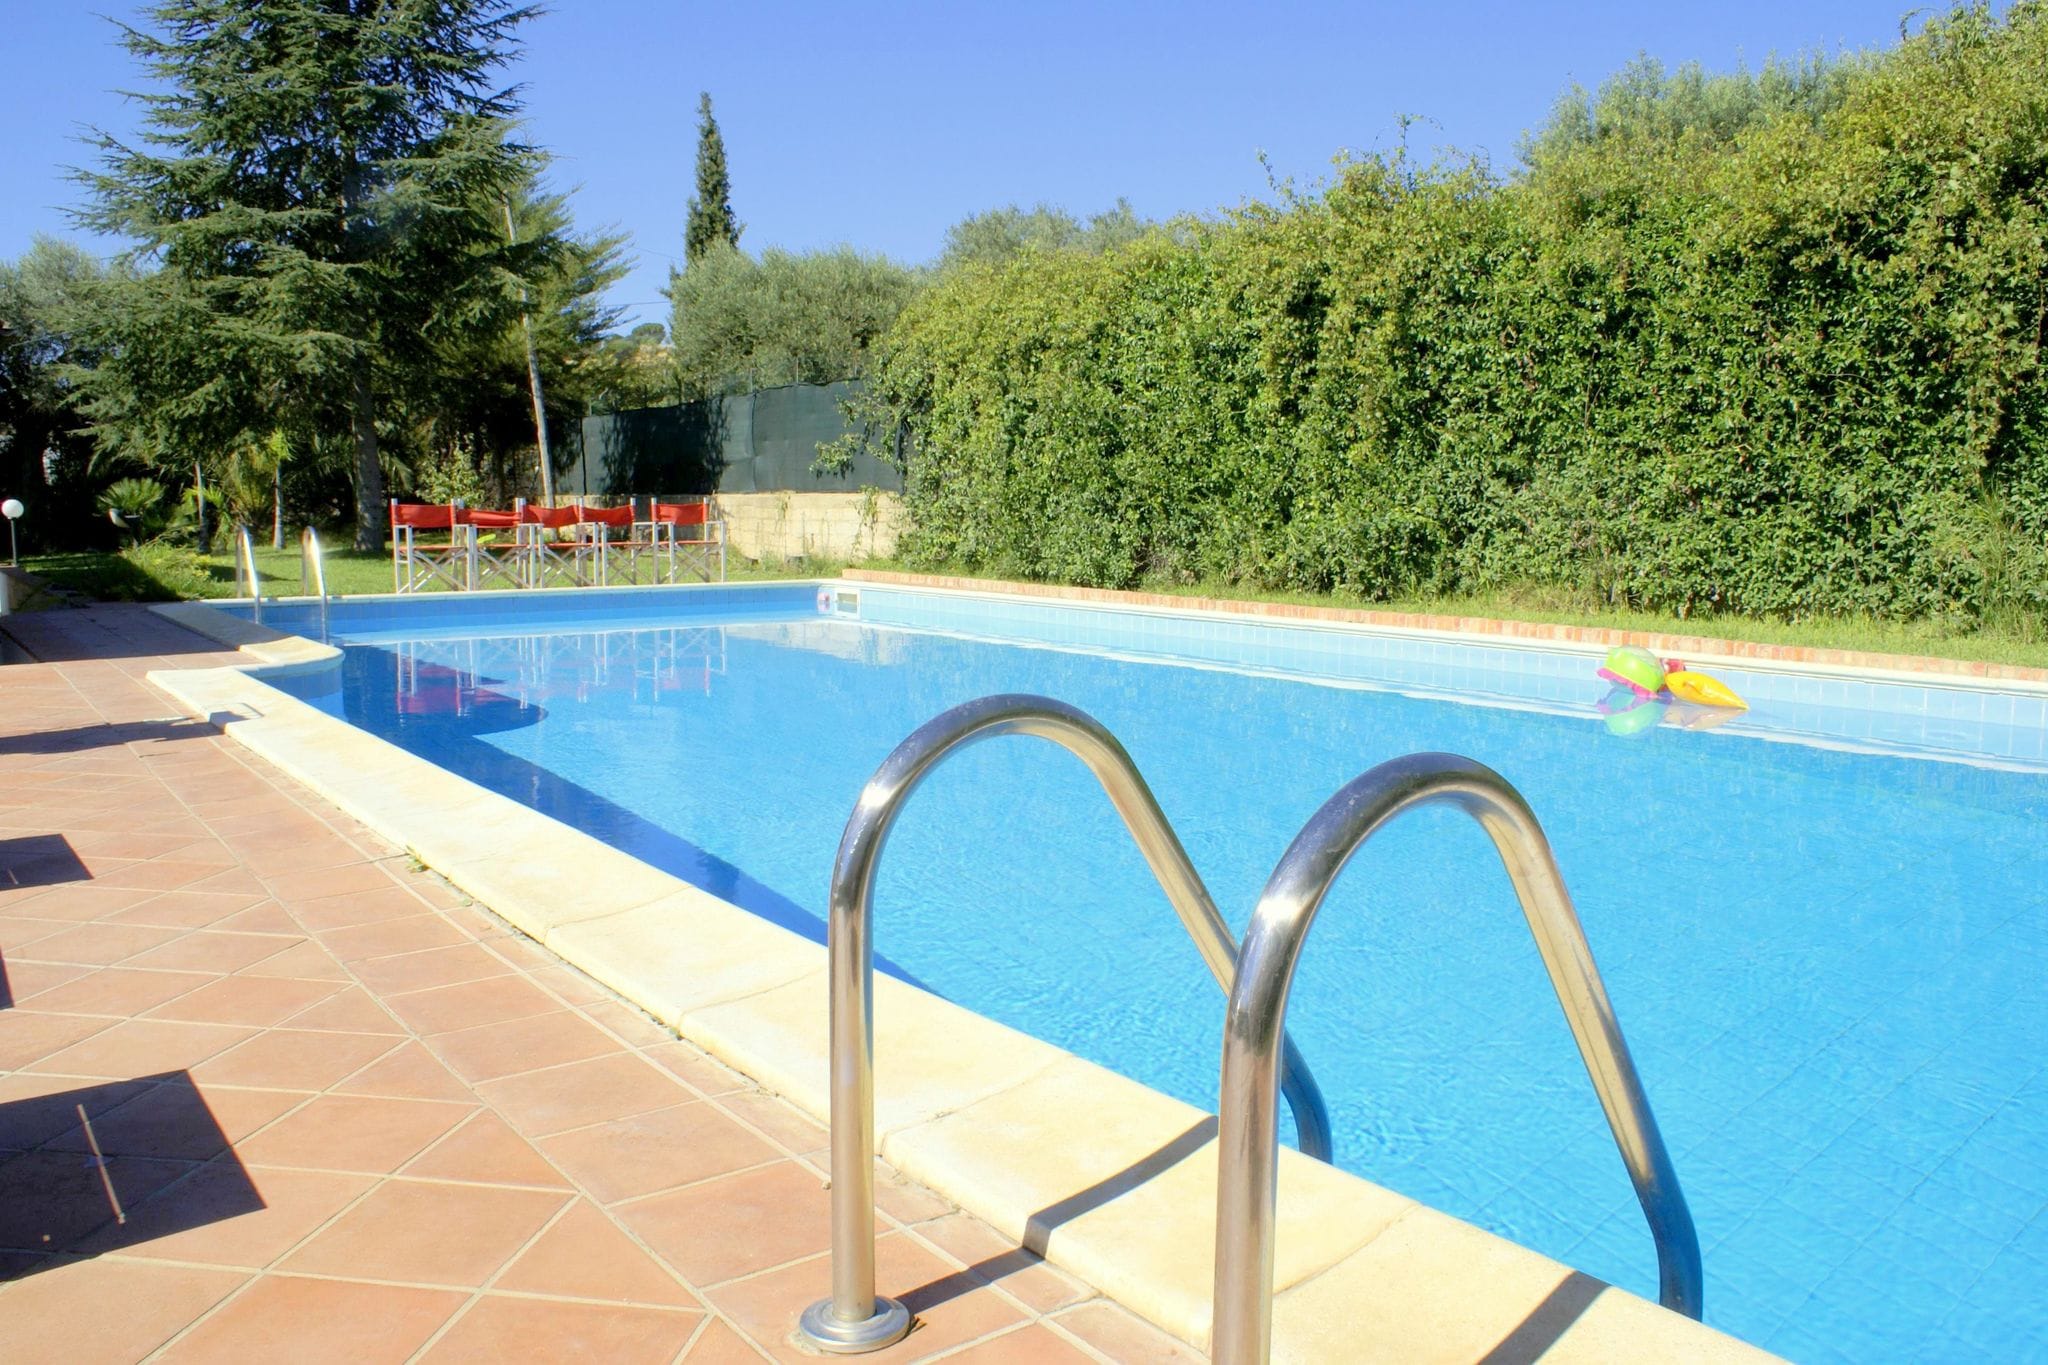 Moderne Villa in Caltagirone, Italien mit privatem Pool